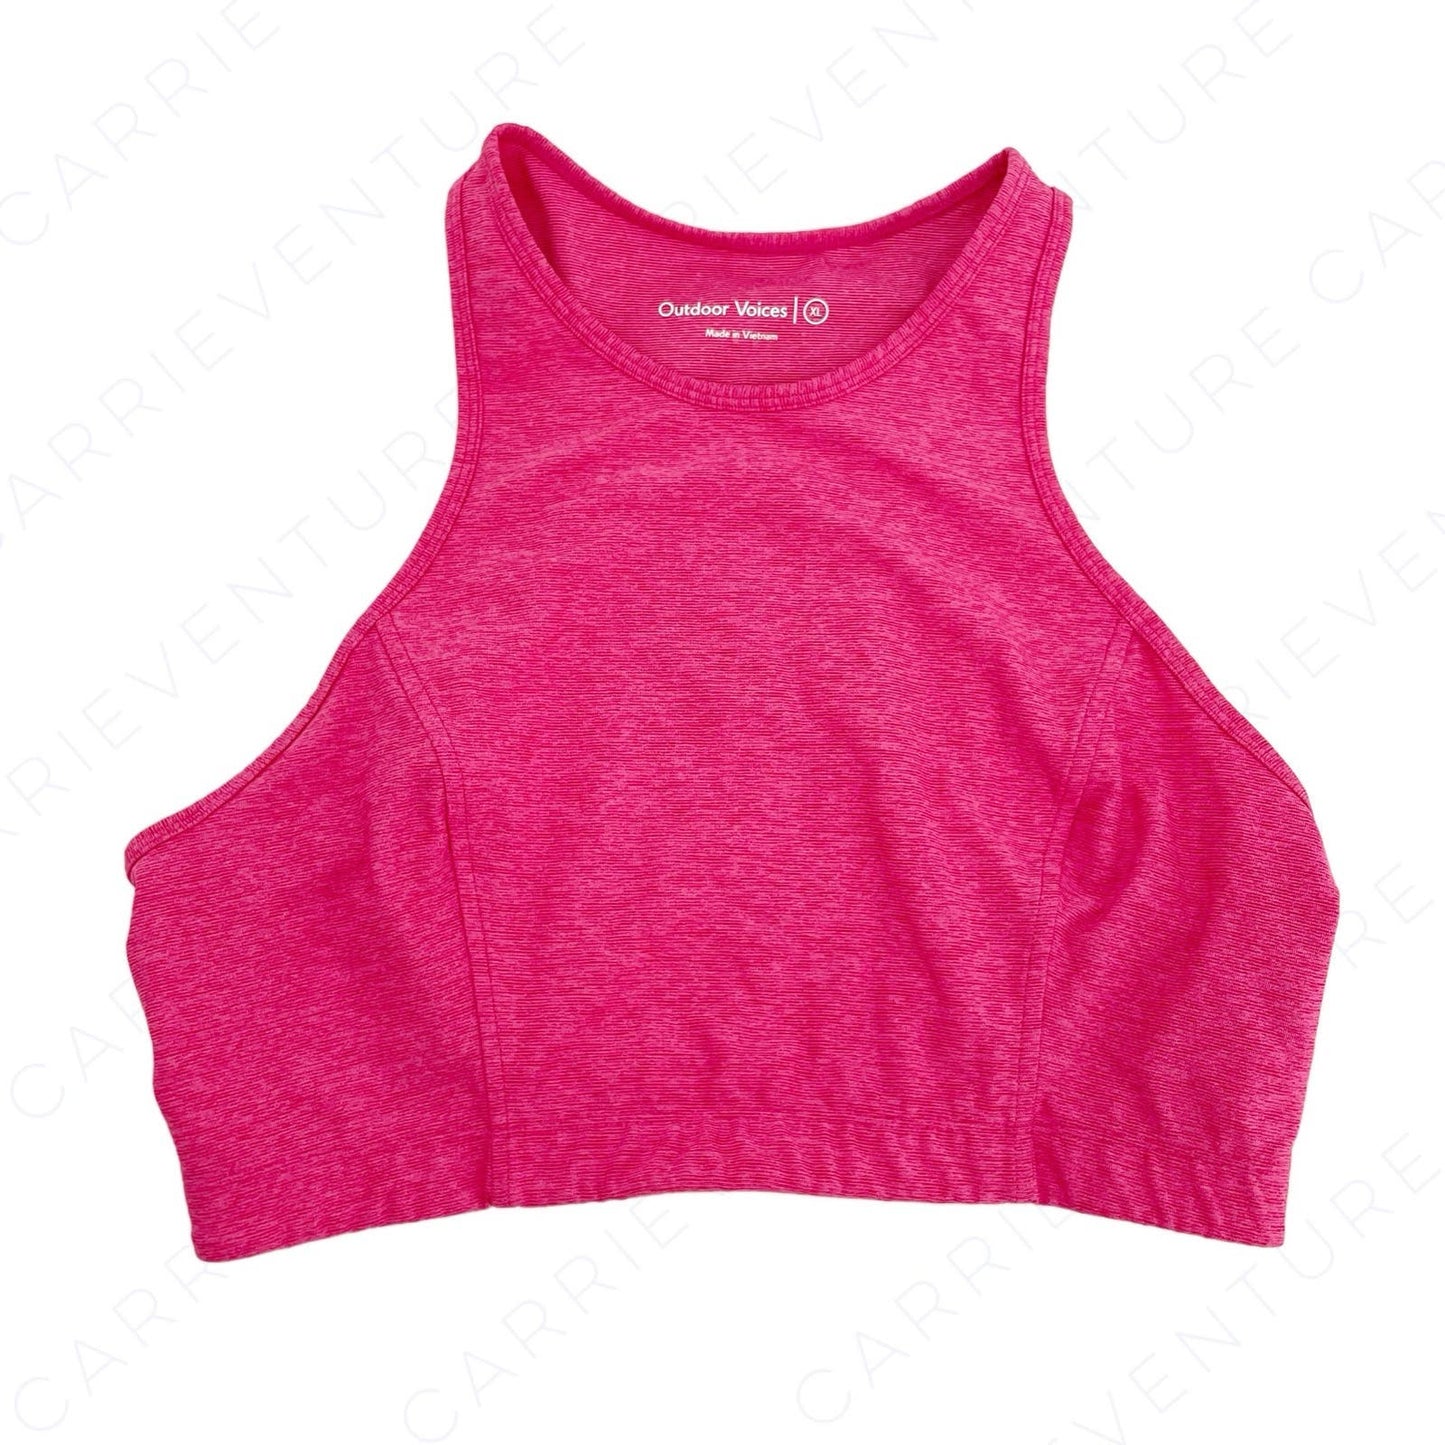 Outdoor Voices Athena Crop Top Flamingo Hot Pink High Neck Sports Bra Size XL